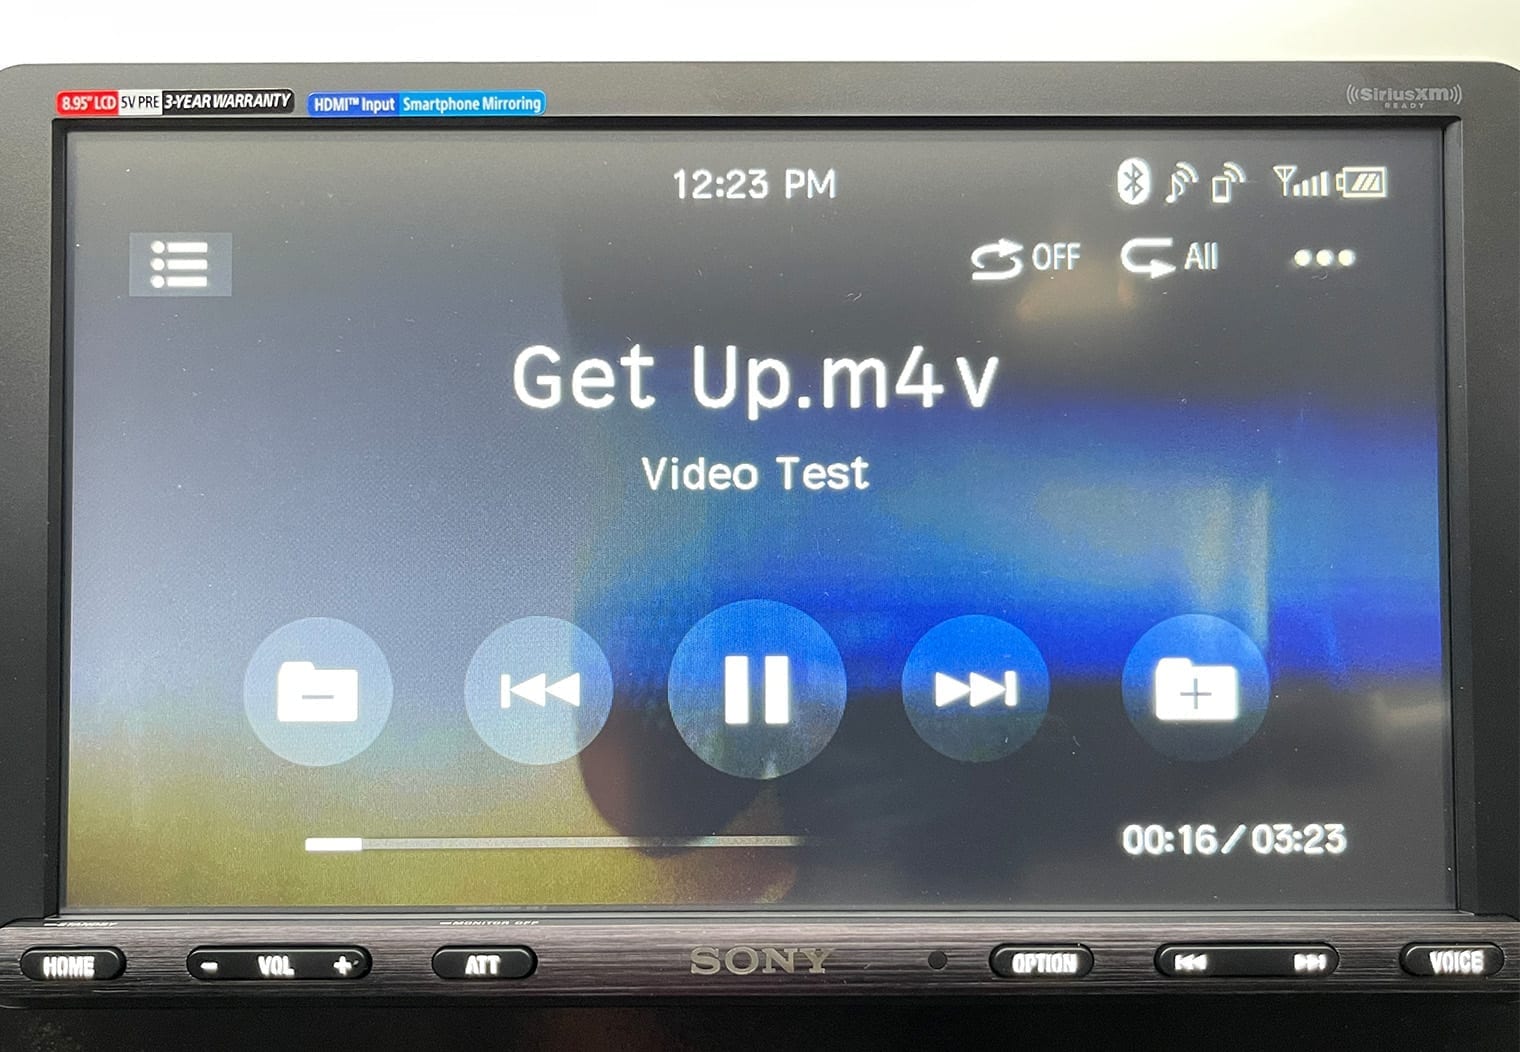 Sony XAV-AX8100 playing video on usb